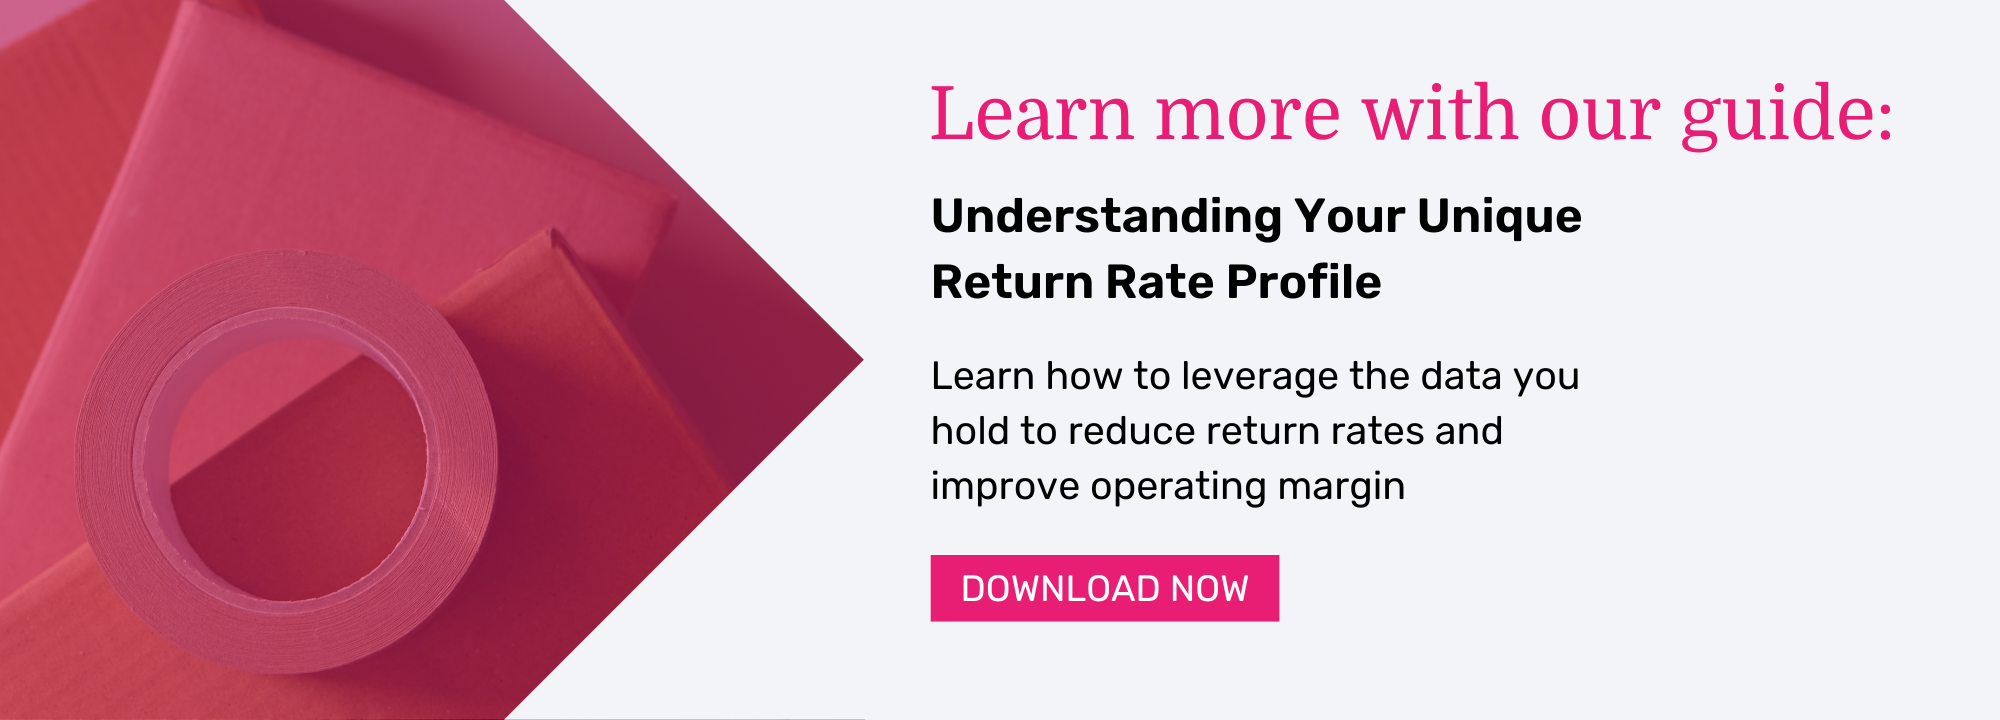 Understanding Your Unique Return Rate Profile